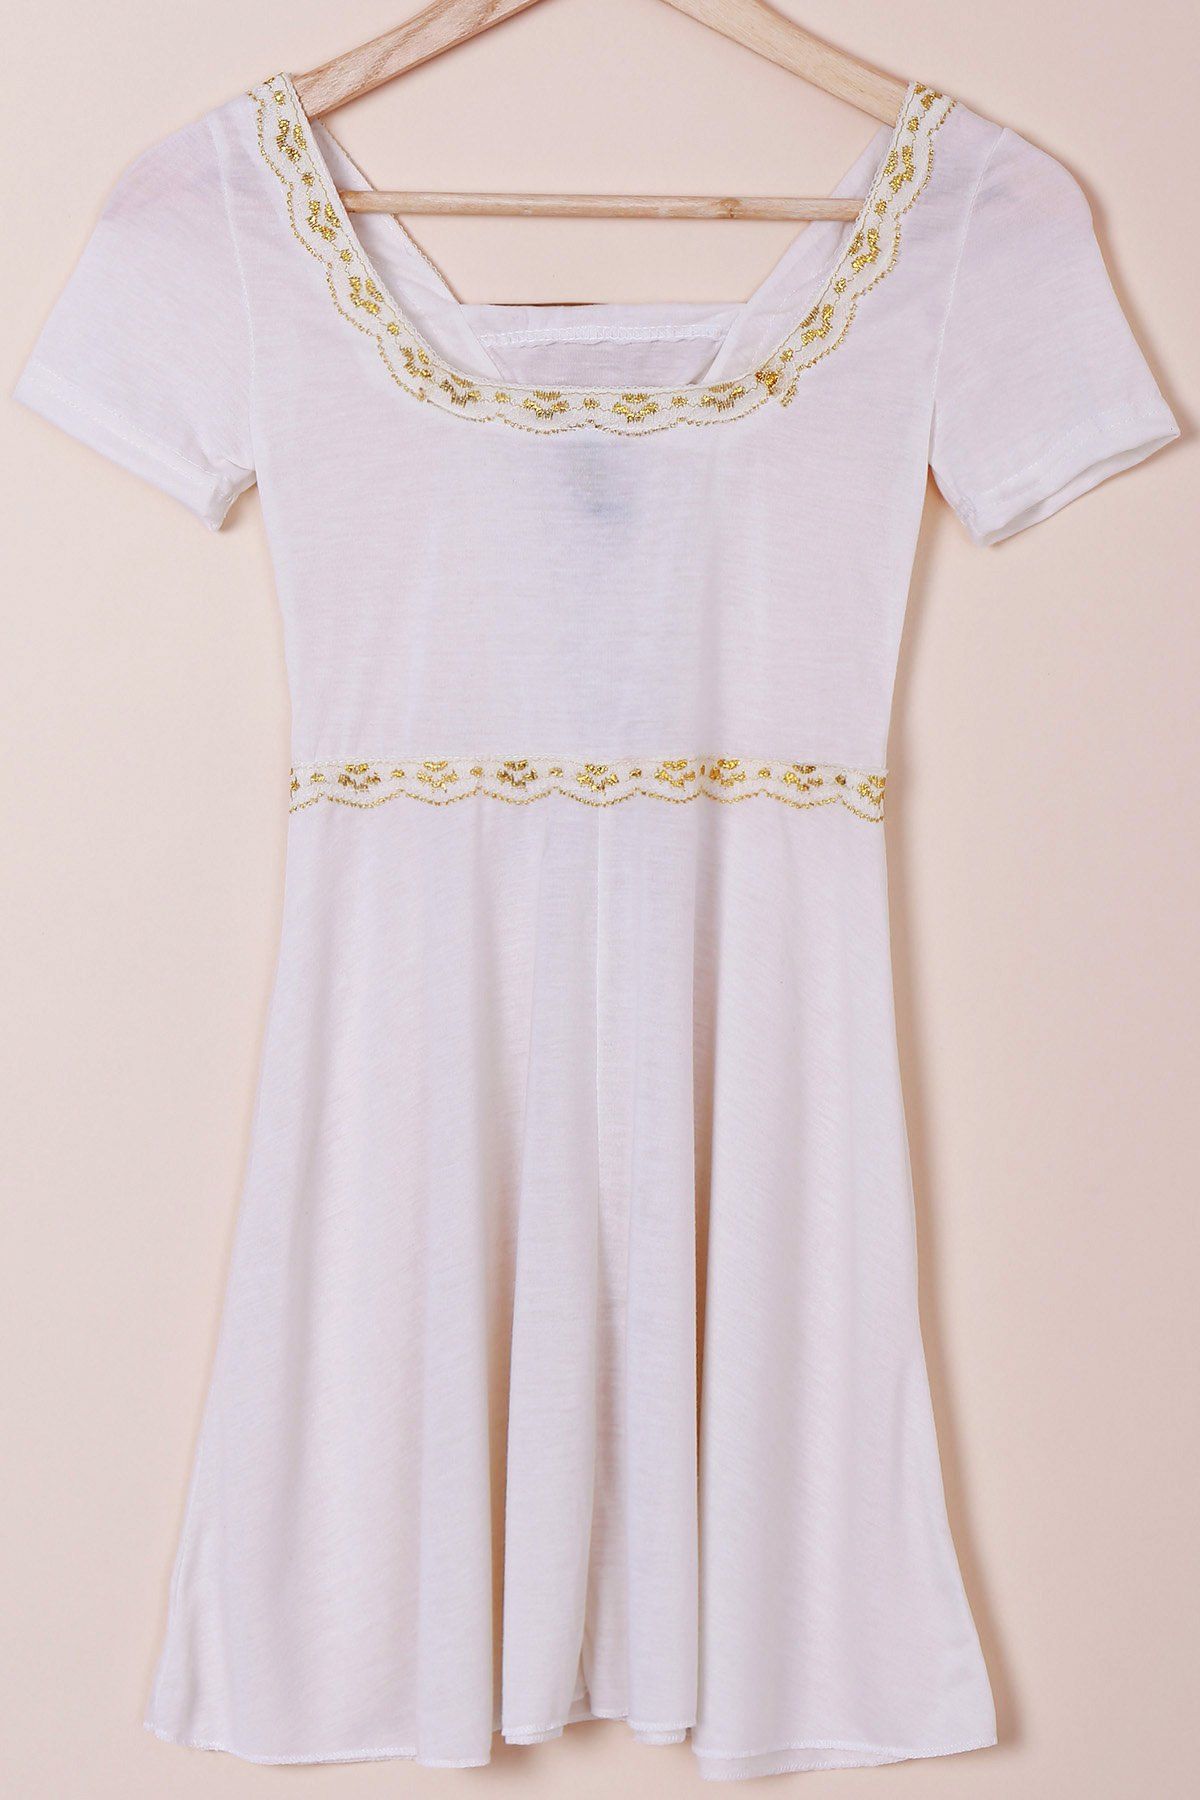 Sweet Short Sleeve High Waist Lace-Up Design T-Shirt For Women - CRYSTAL CREAM S